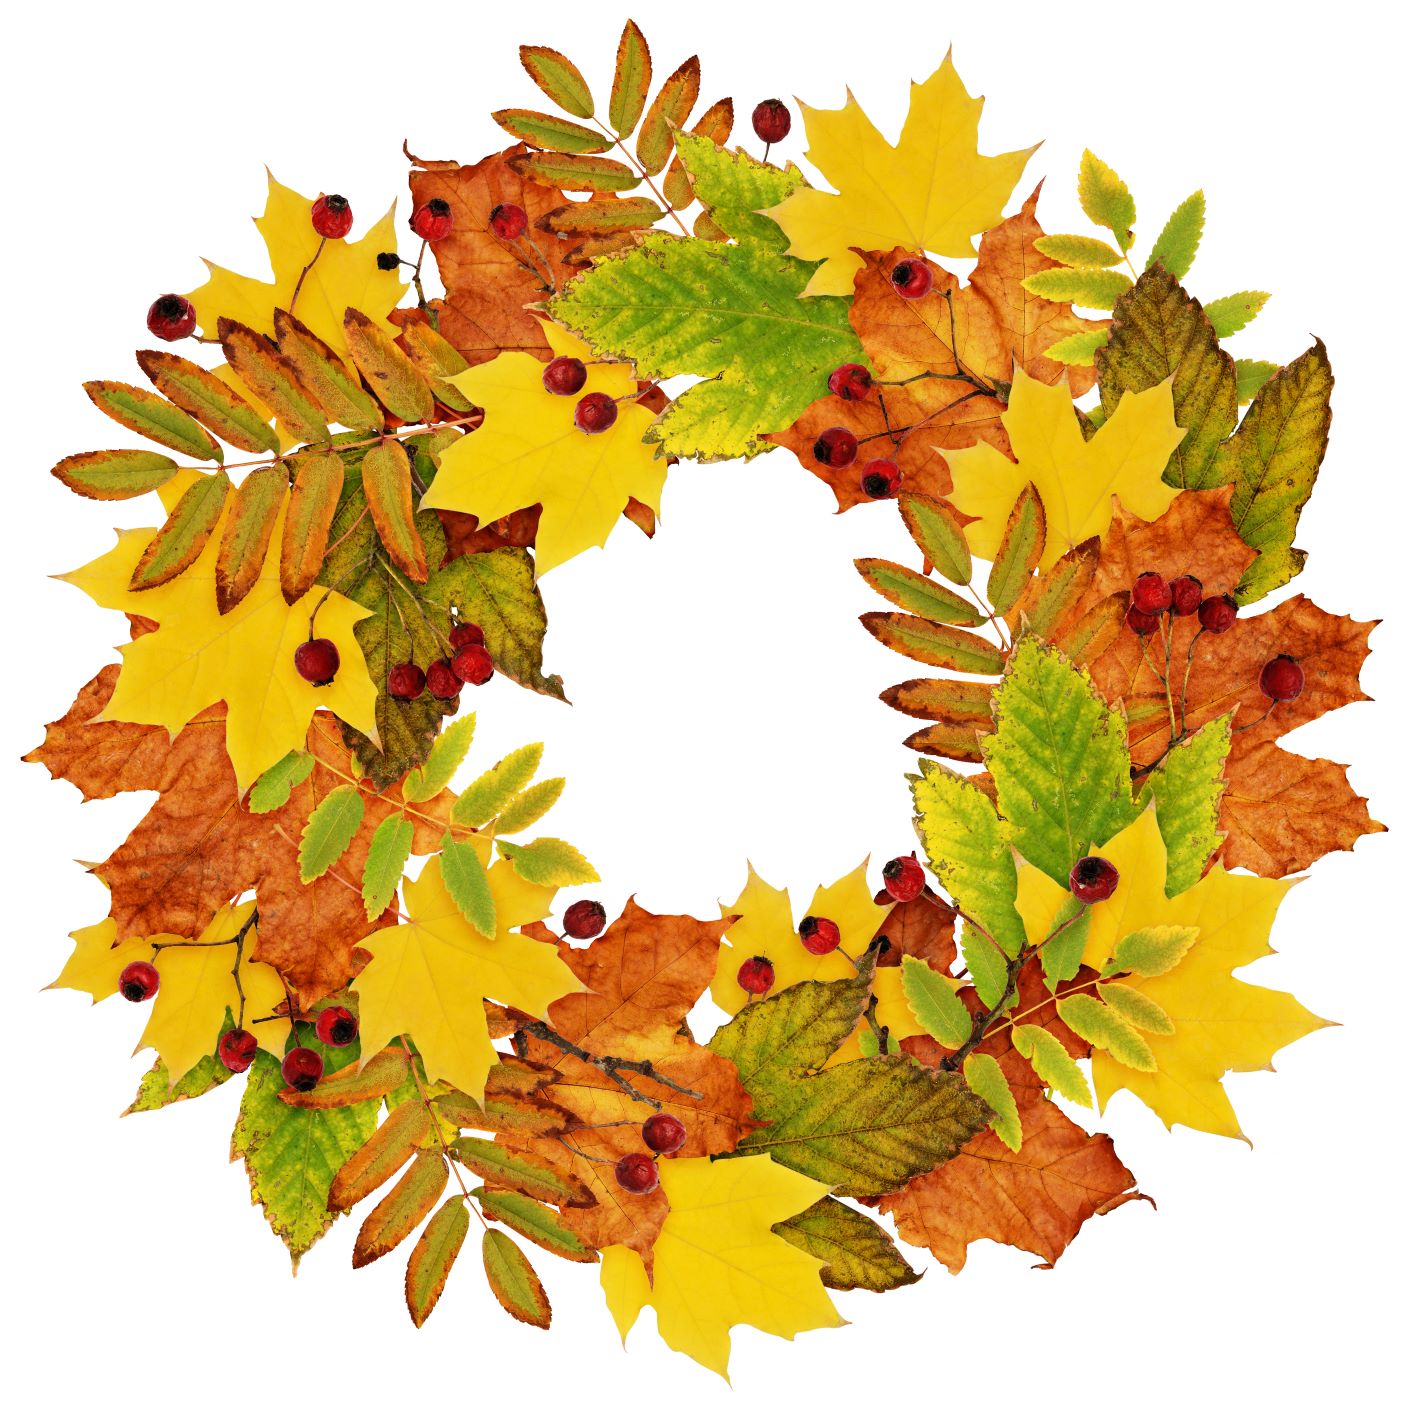 Autumn wreath